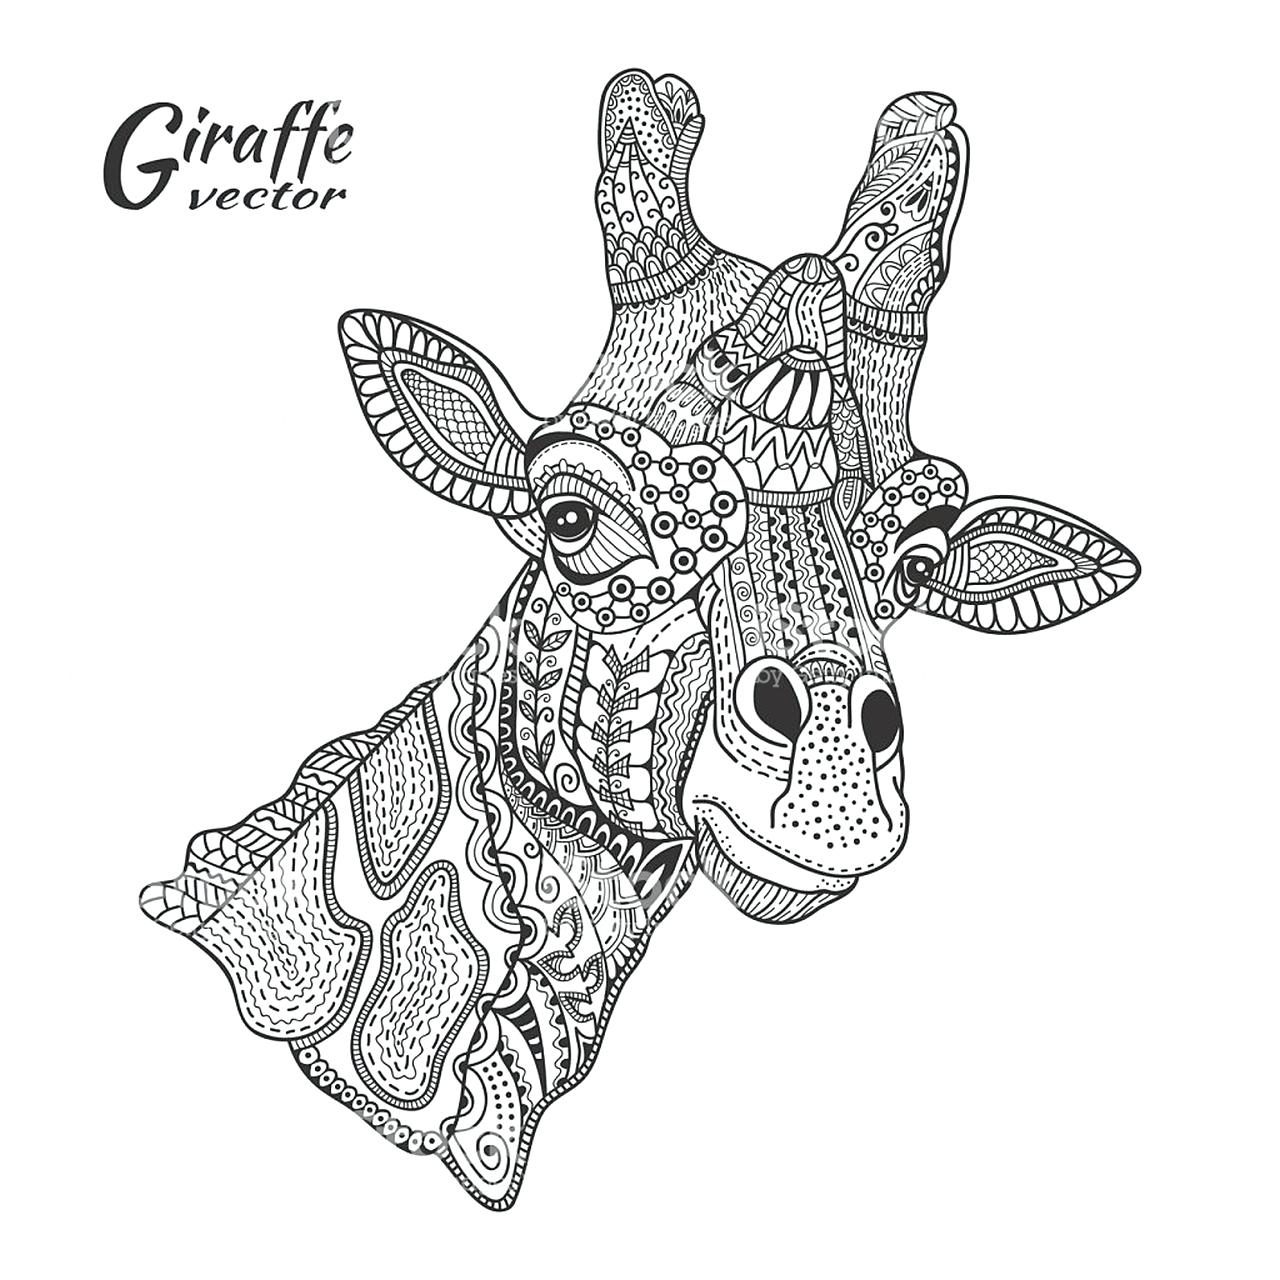 Giraffe Images Drawing at GetDrawings | Free download